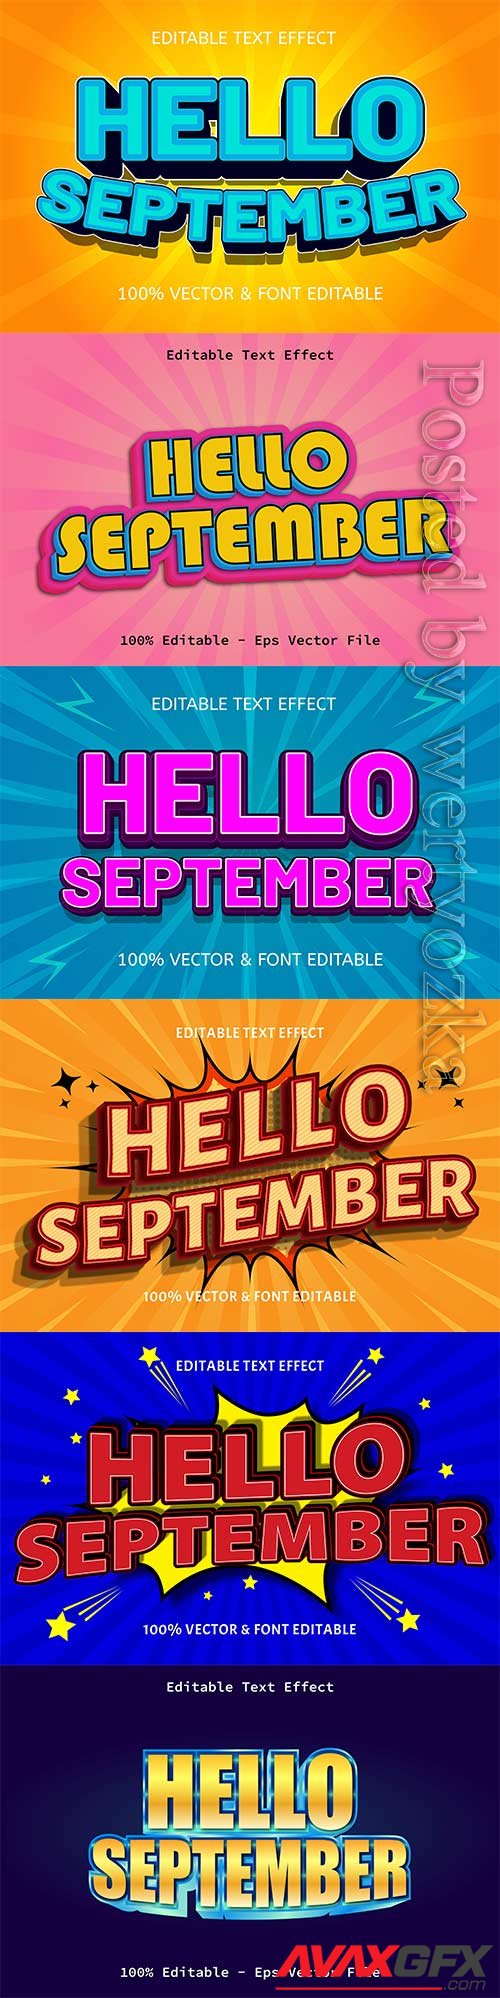 Hello september editable text effect vol 11